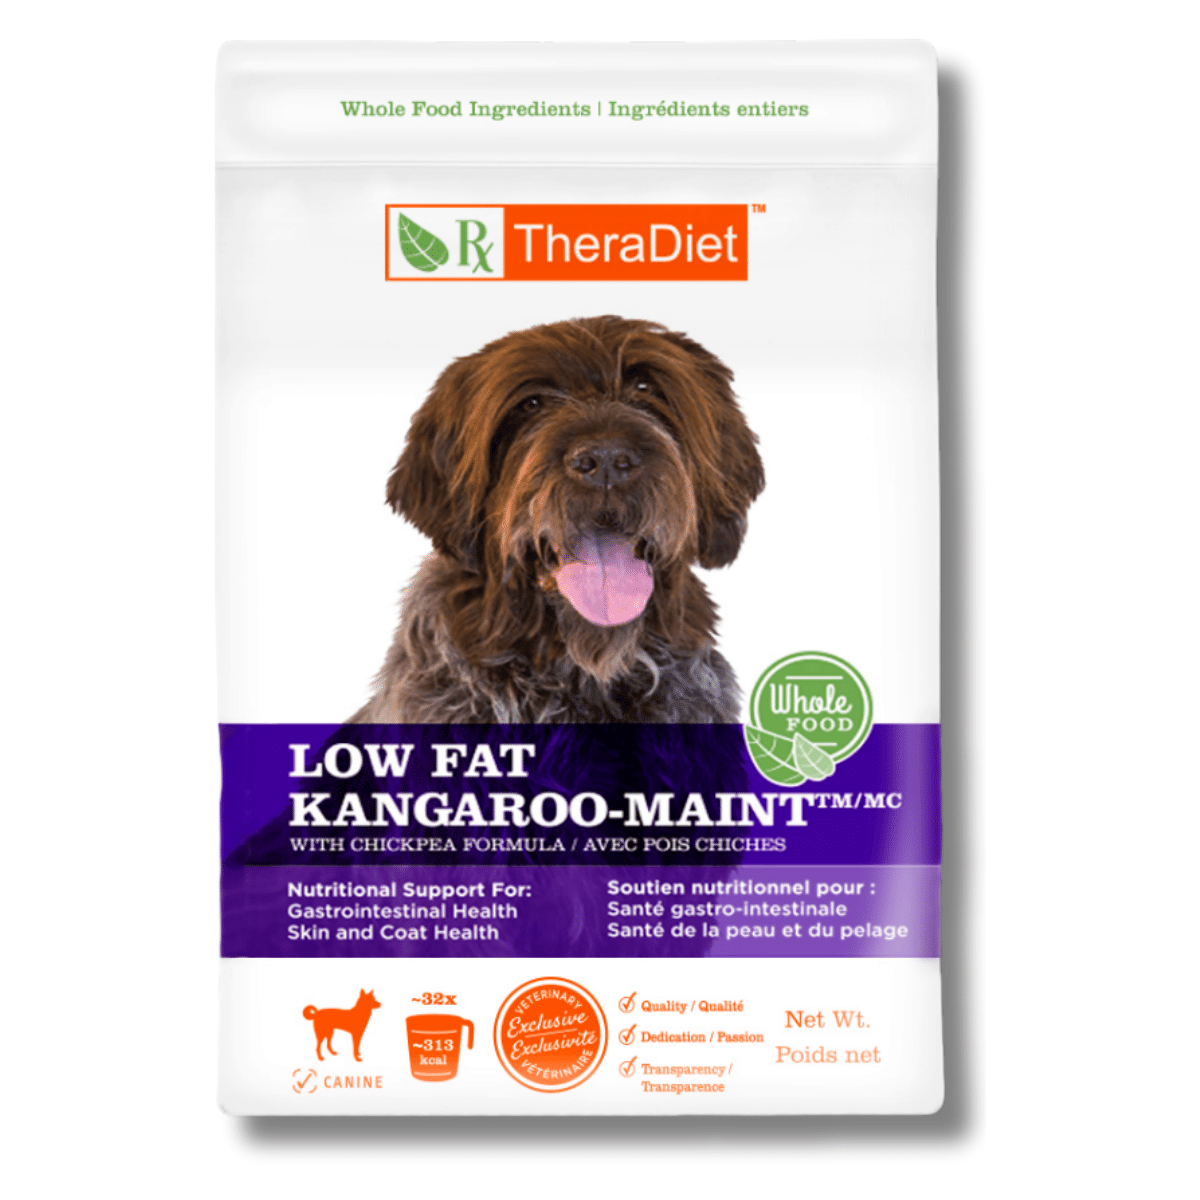 Low Fat Kangaroo-MAINT Dry Dog Food